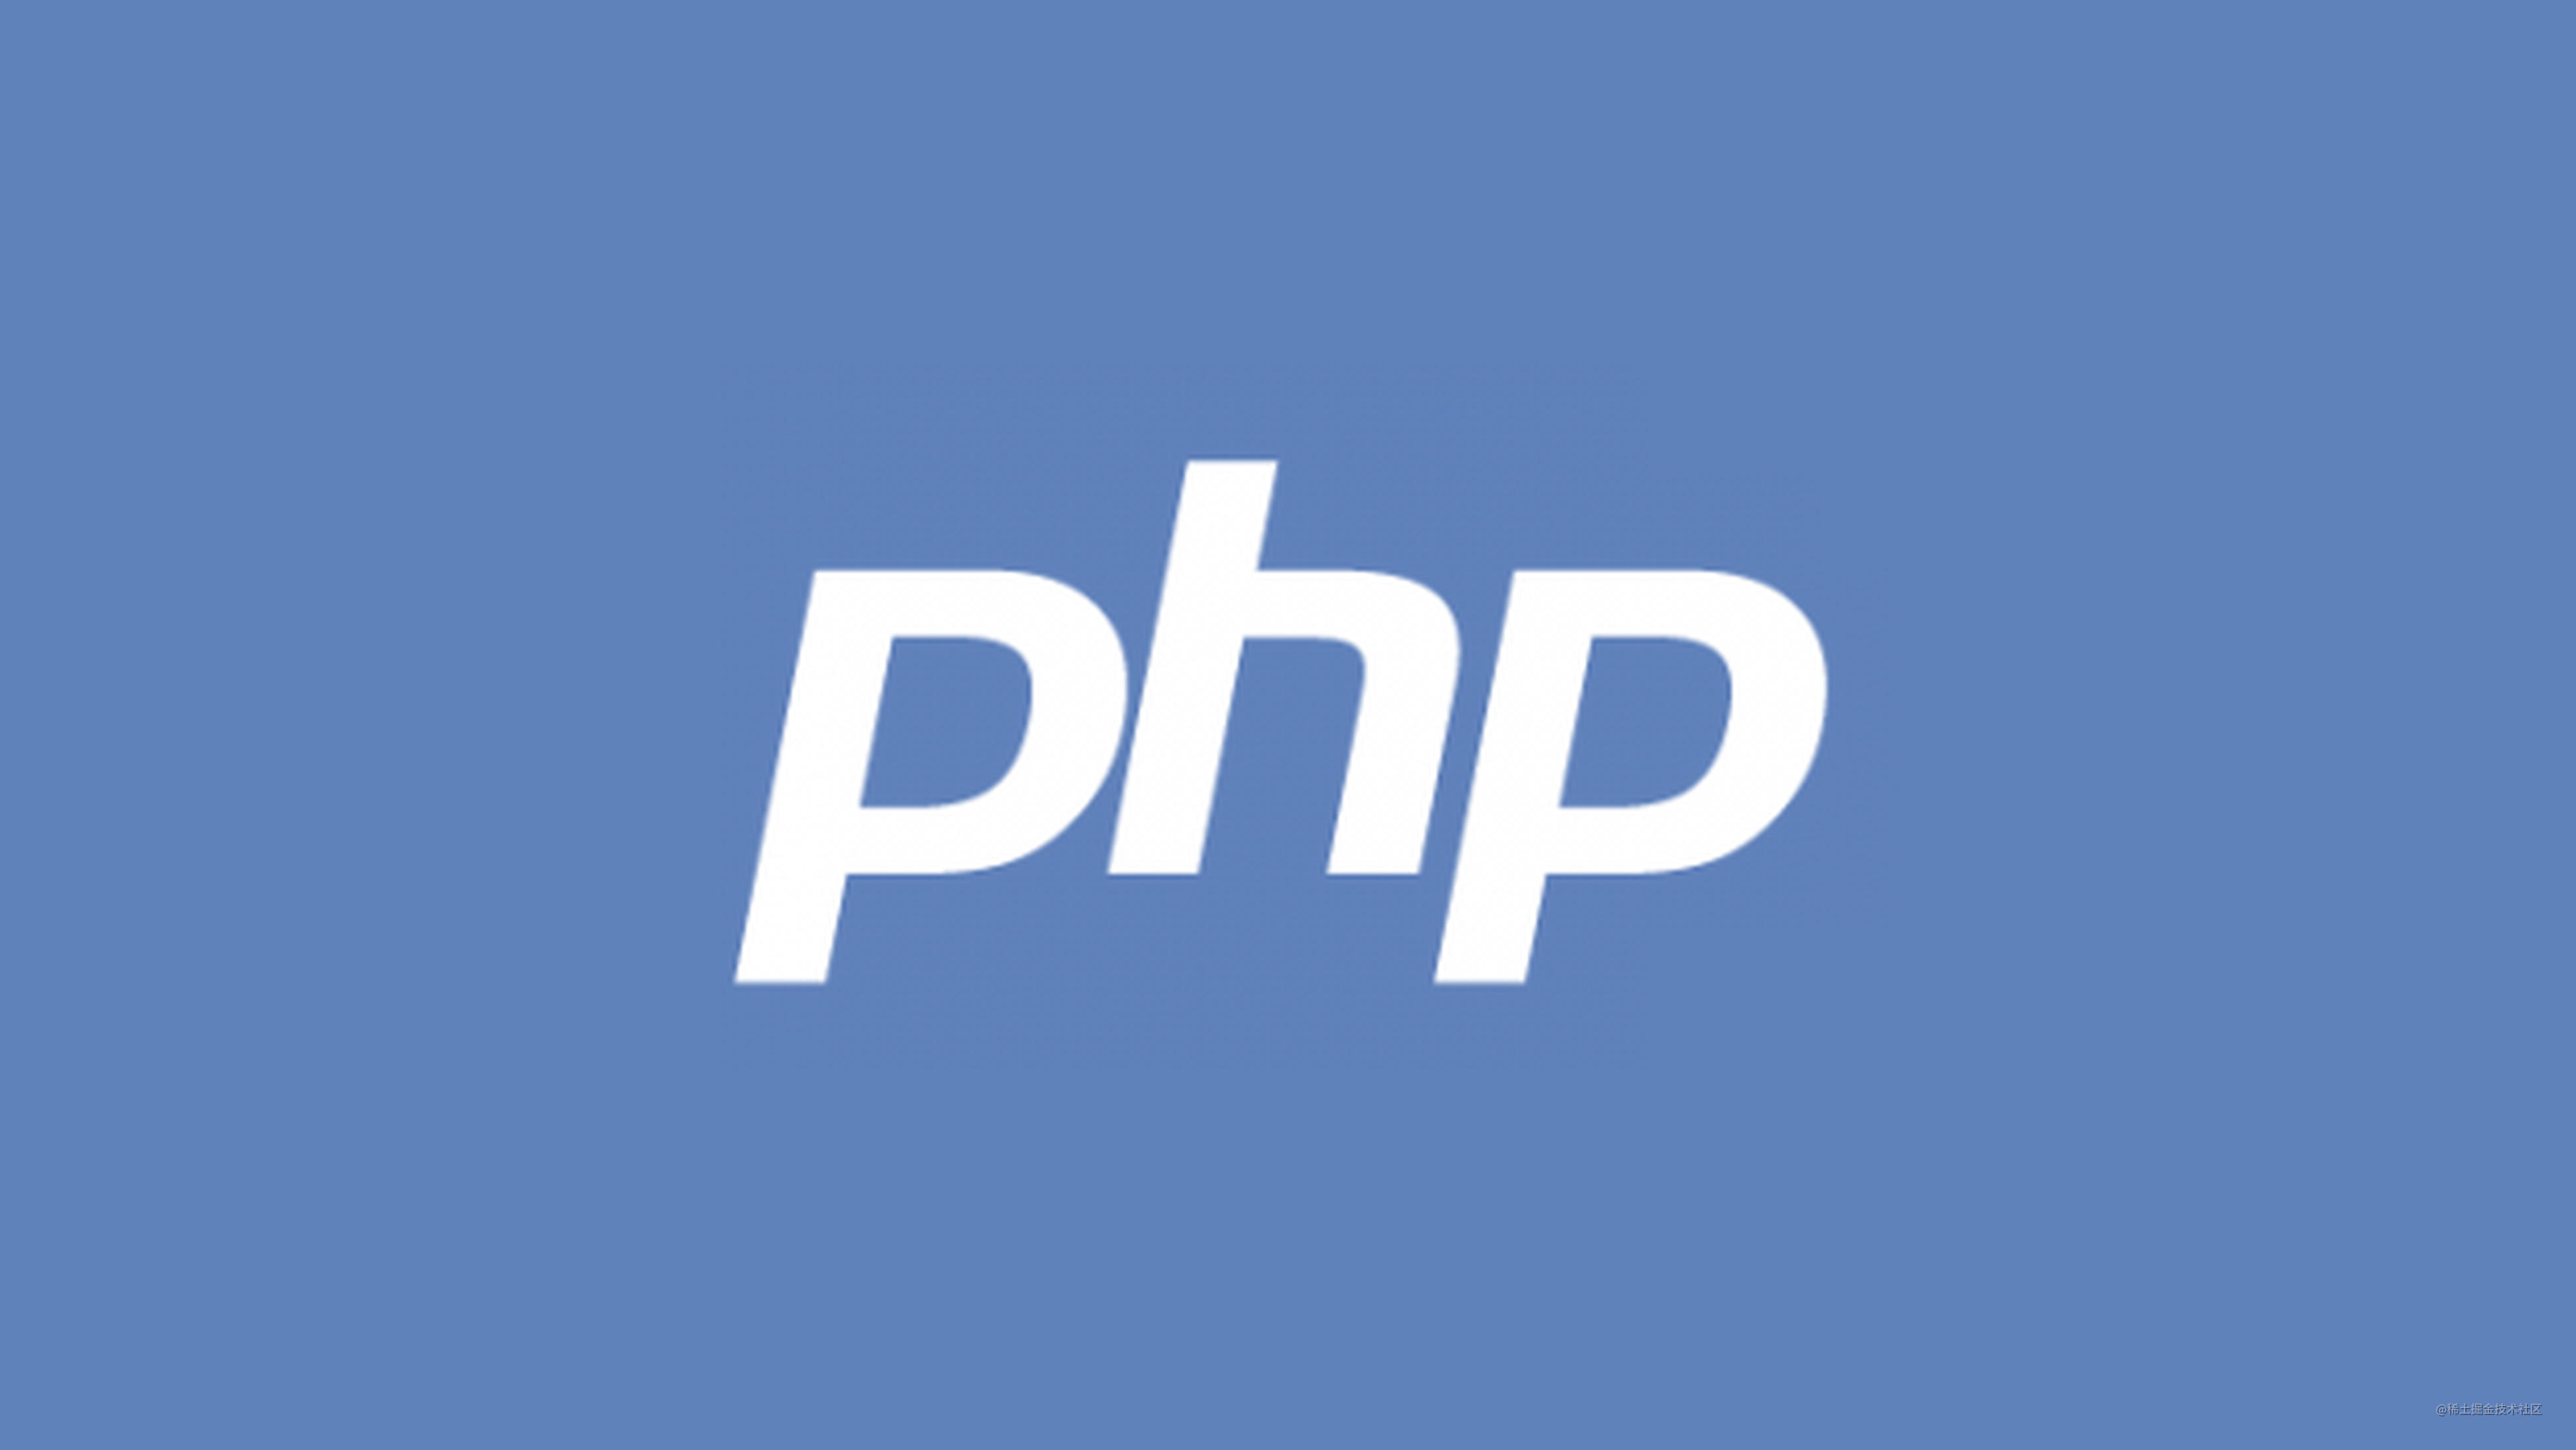 【PHP 工程师必读】PHP The Right Way 中文版本已完成更新！